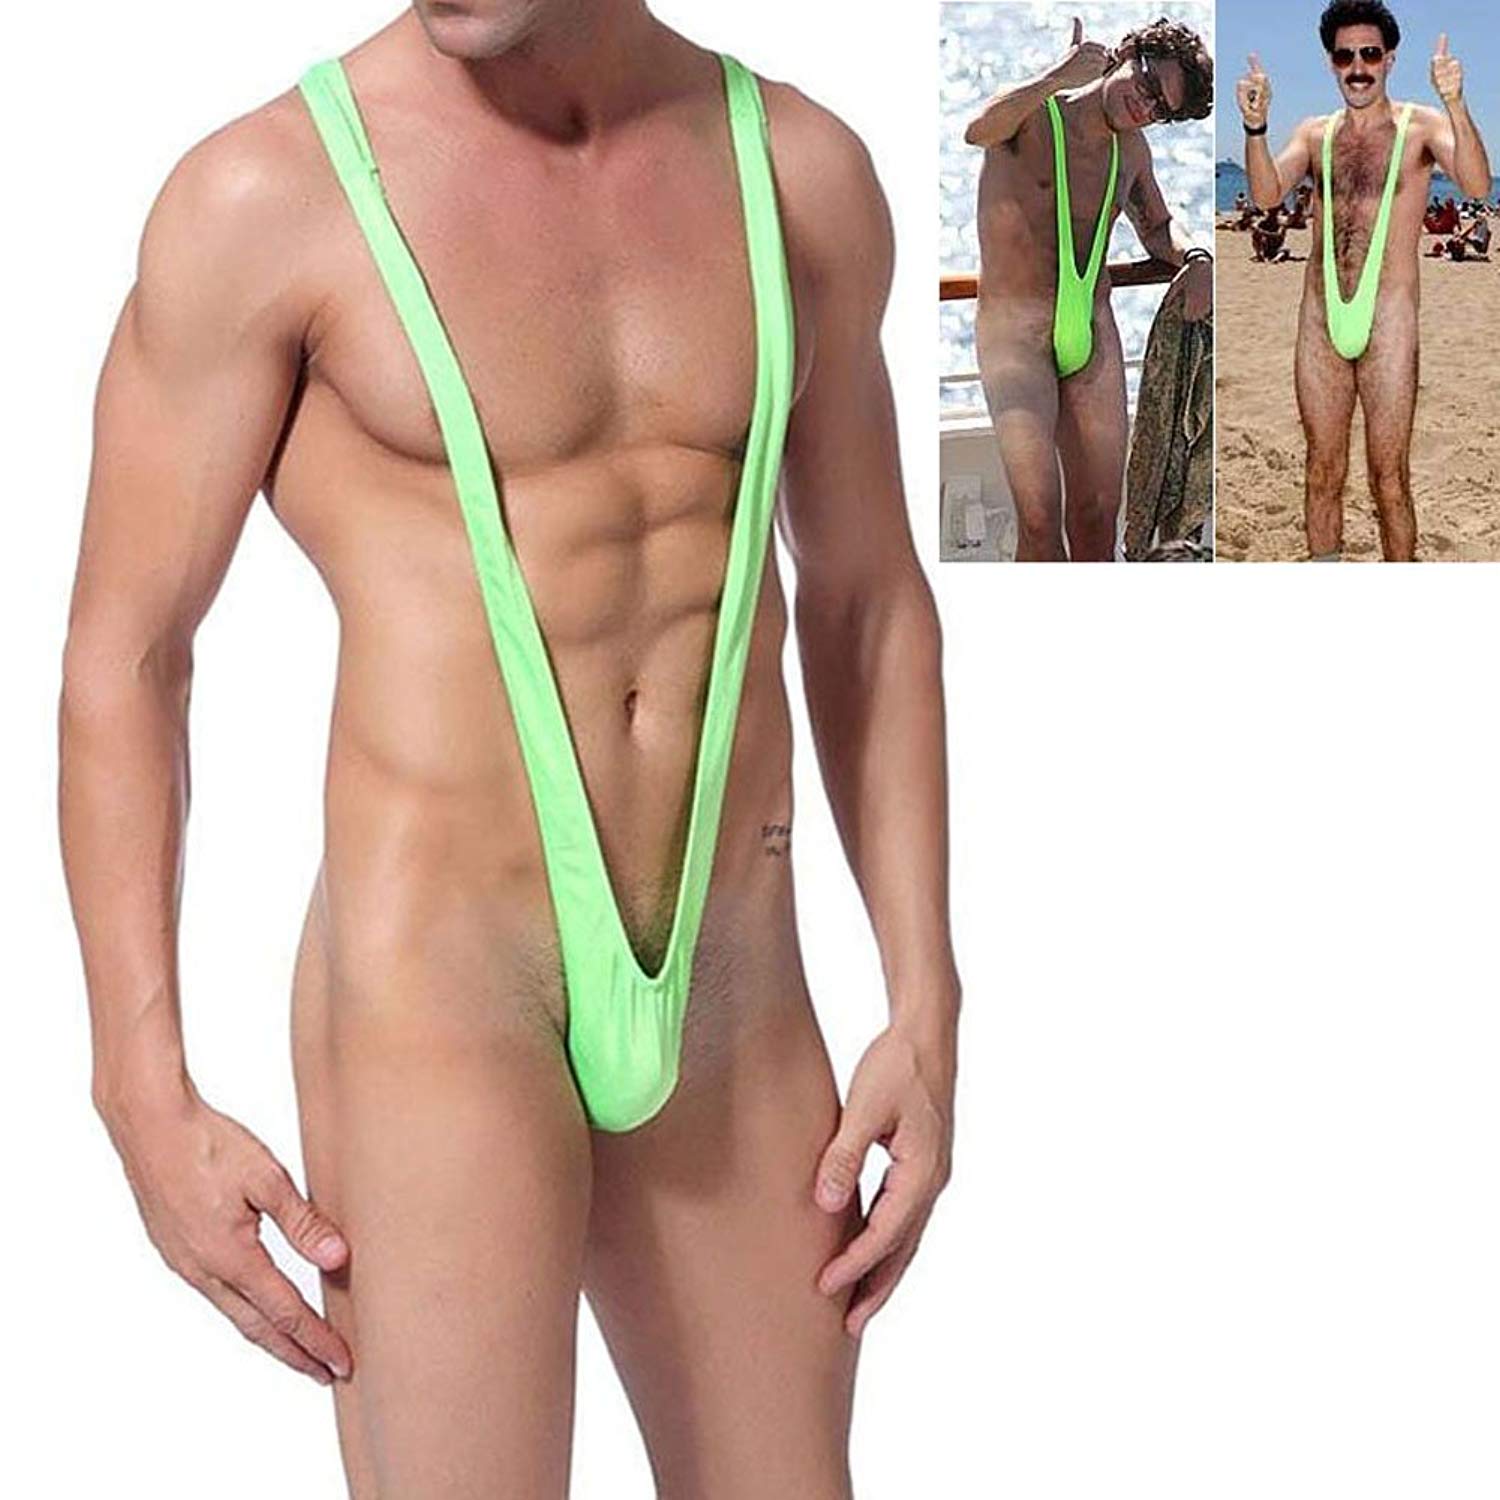 best of Bikini photo Borat